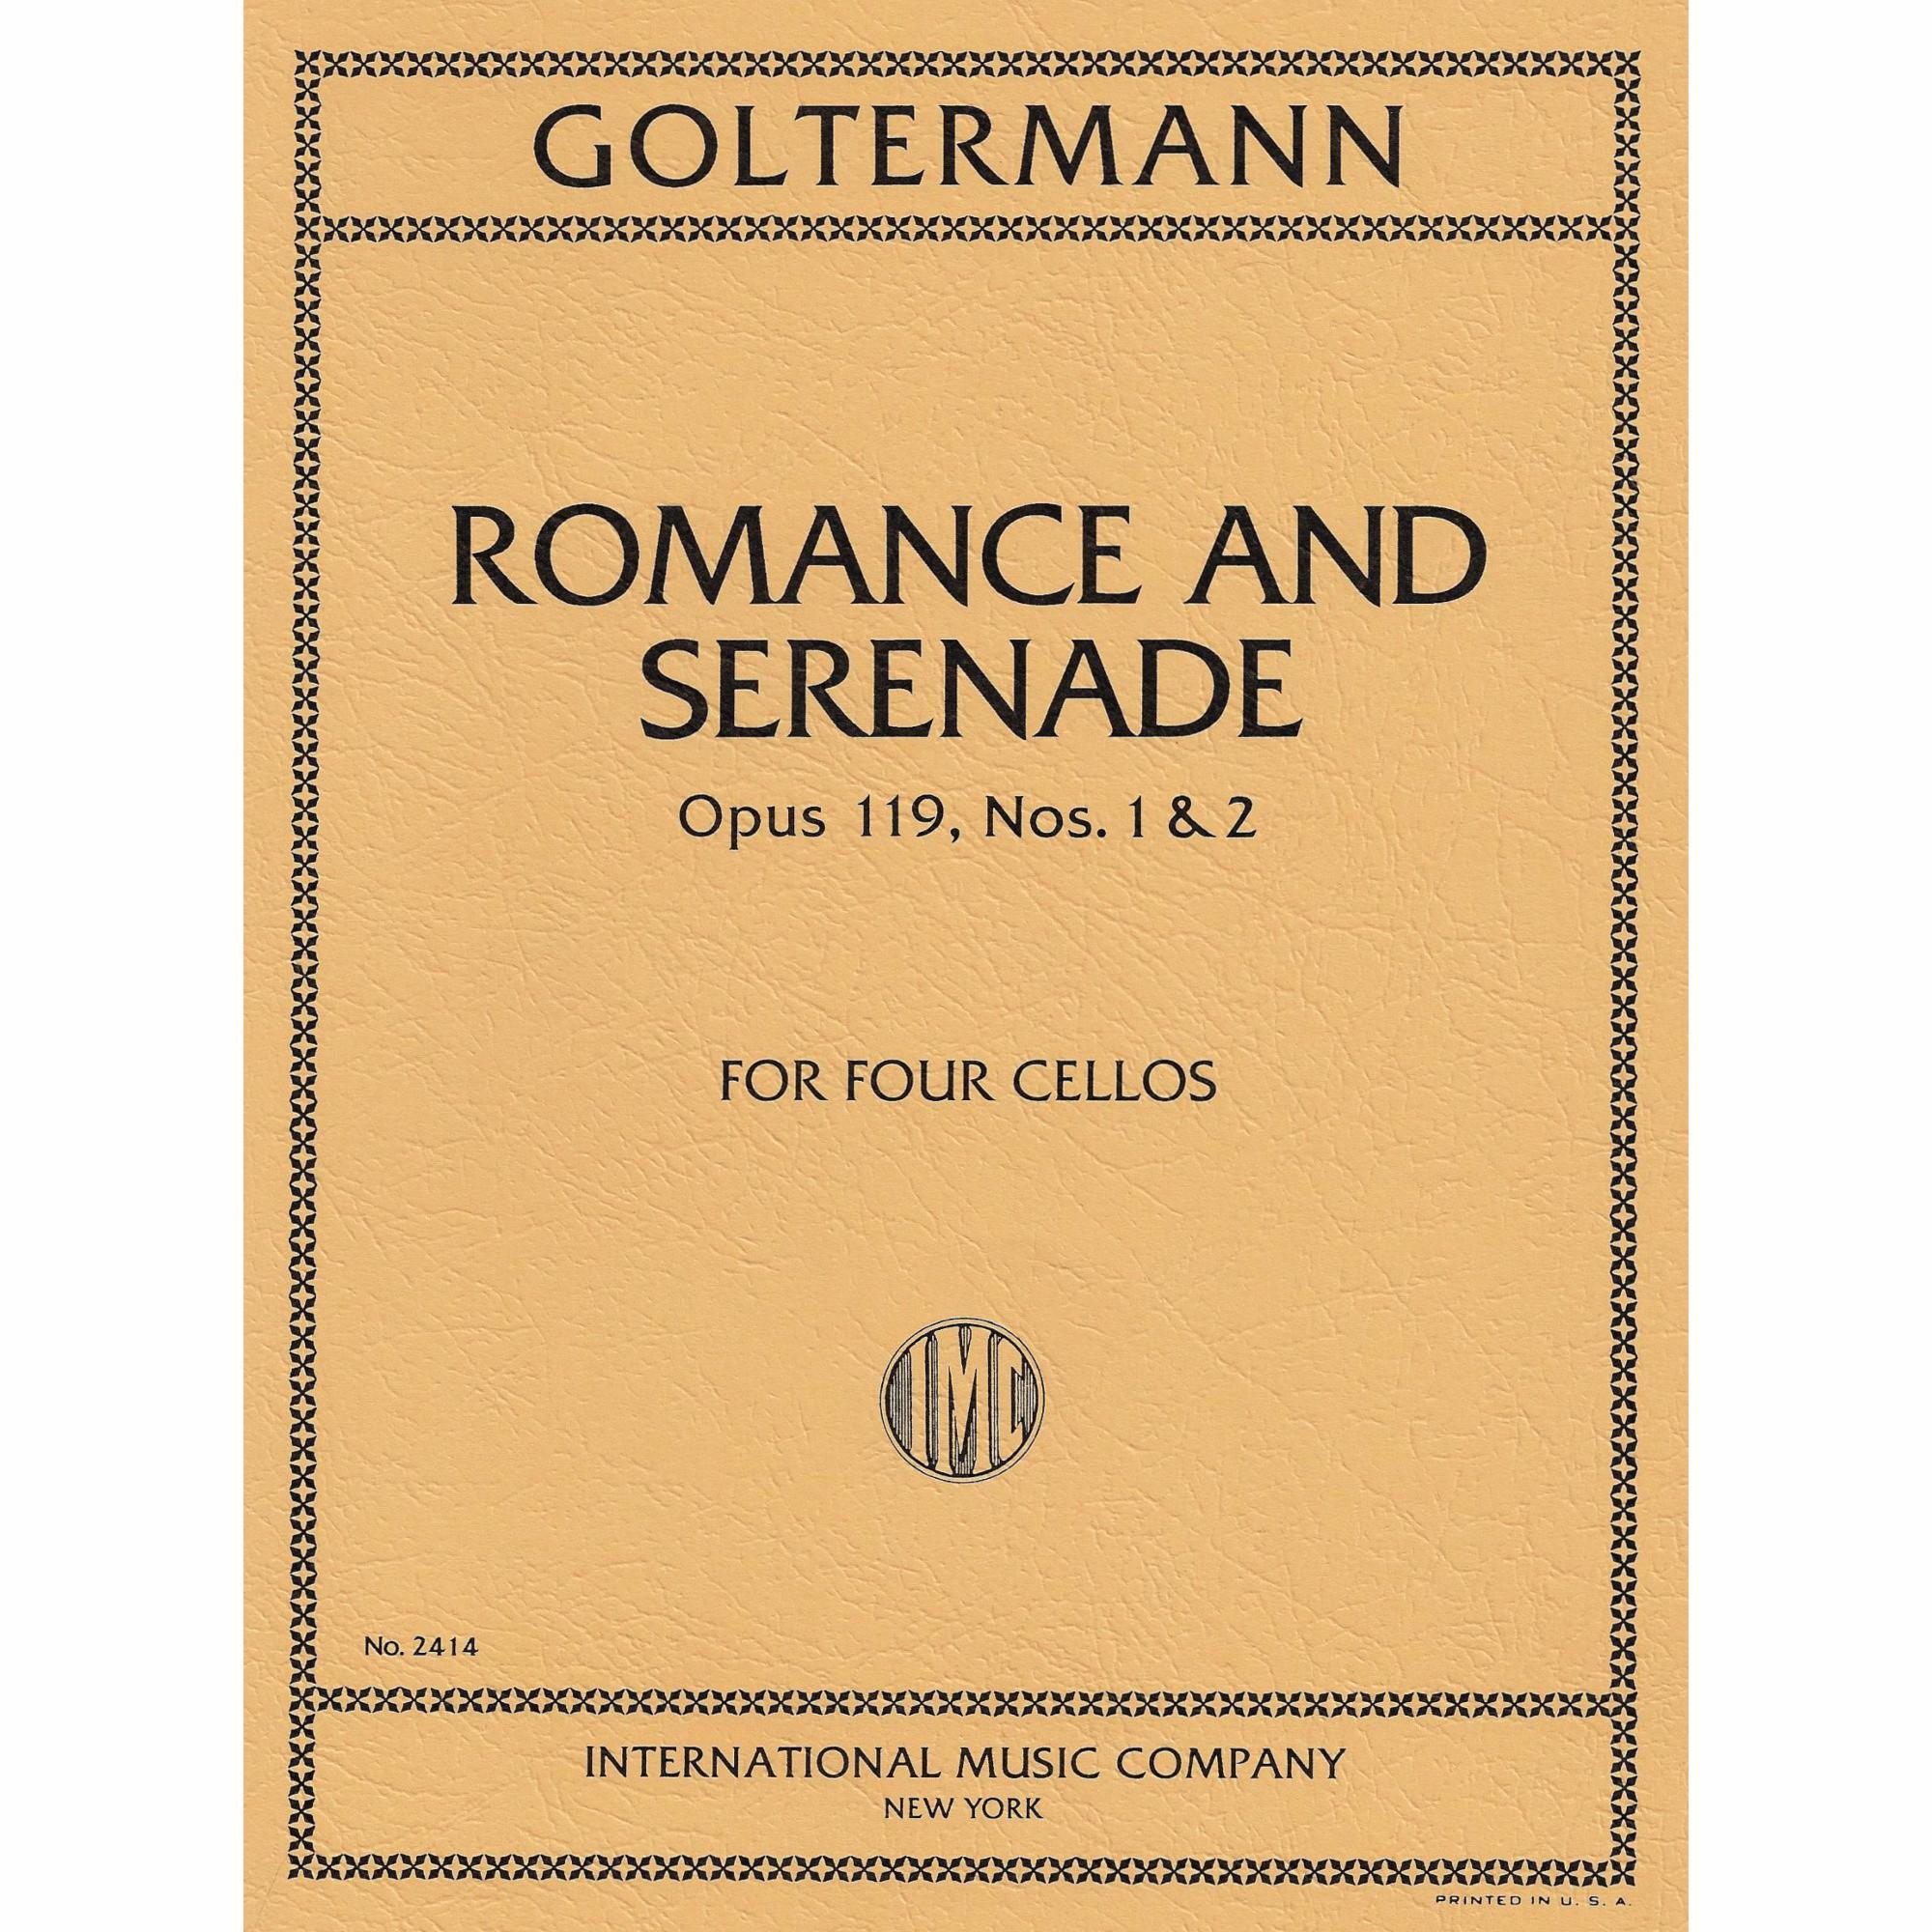 Goltermann -- Romance and Serenade, Op. 119, Nos. 1 & 2 for Four Cellos